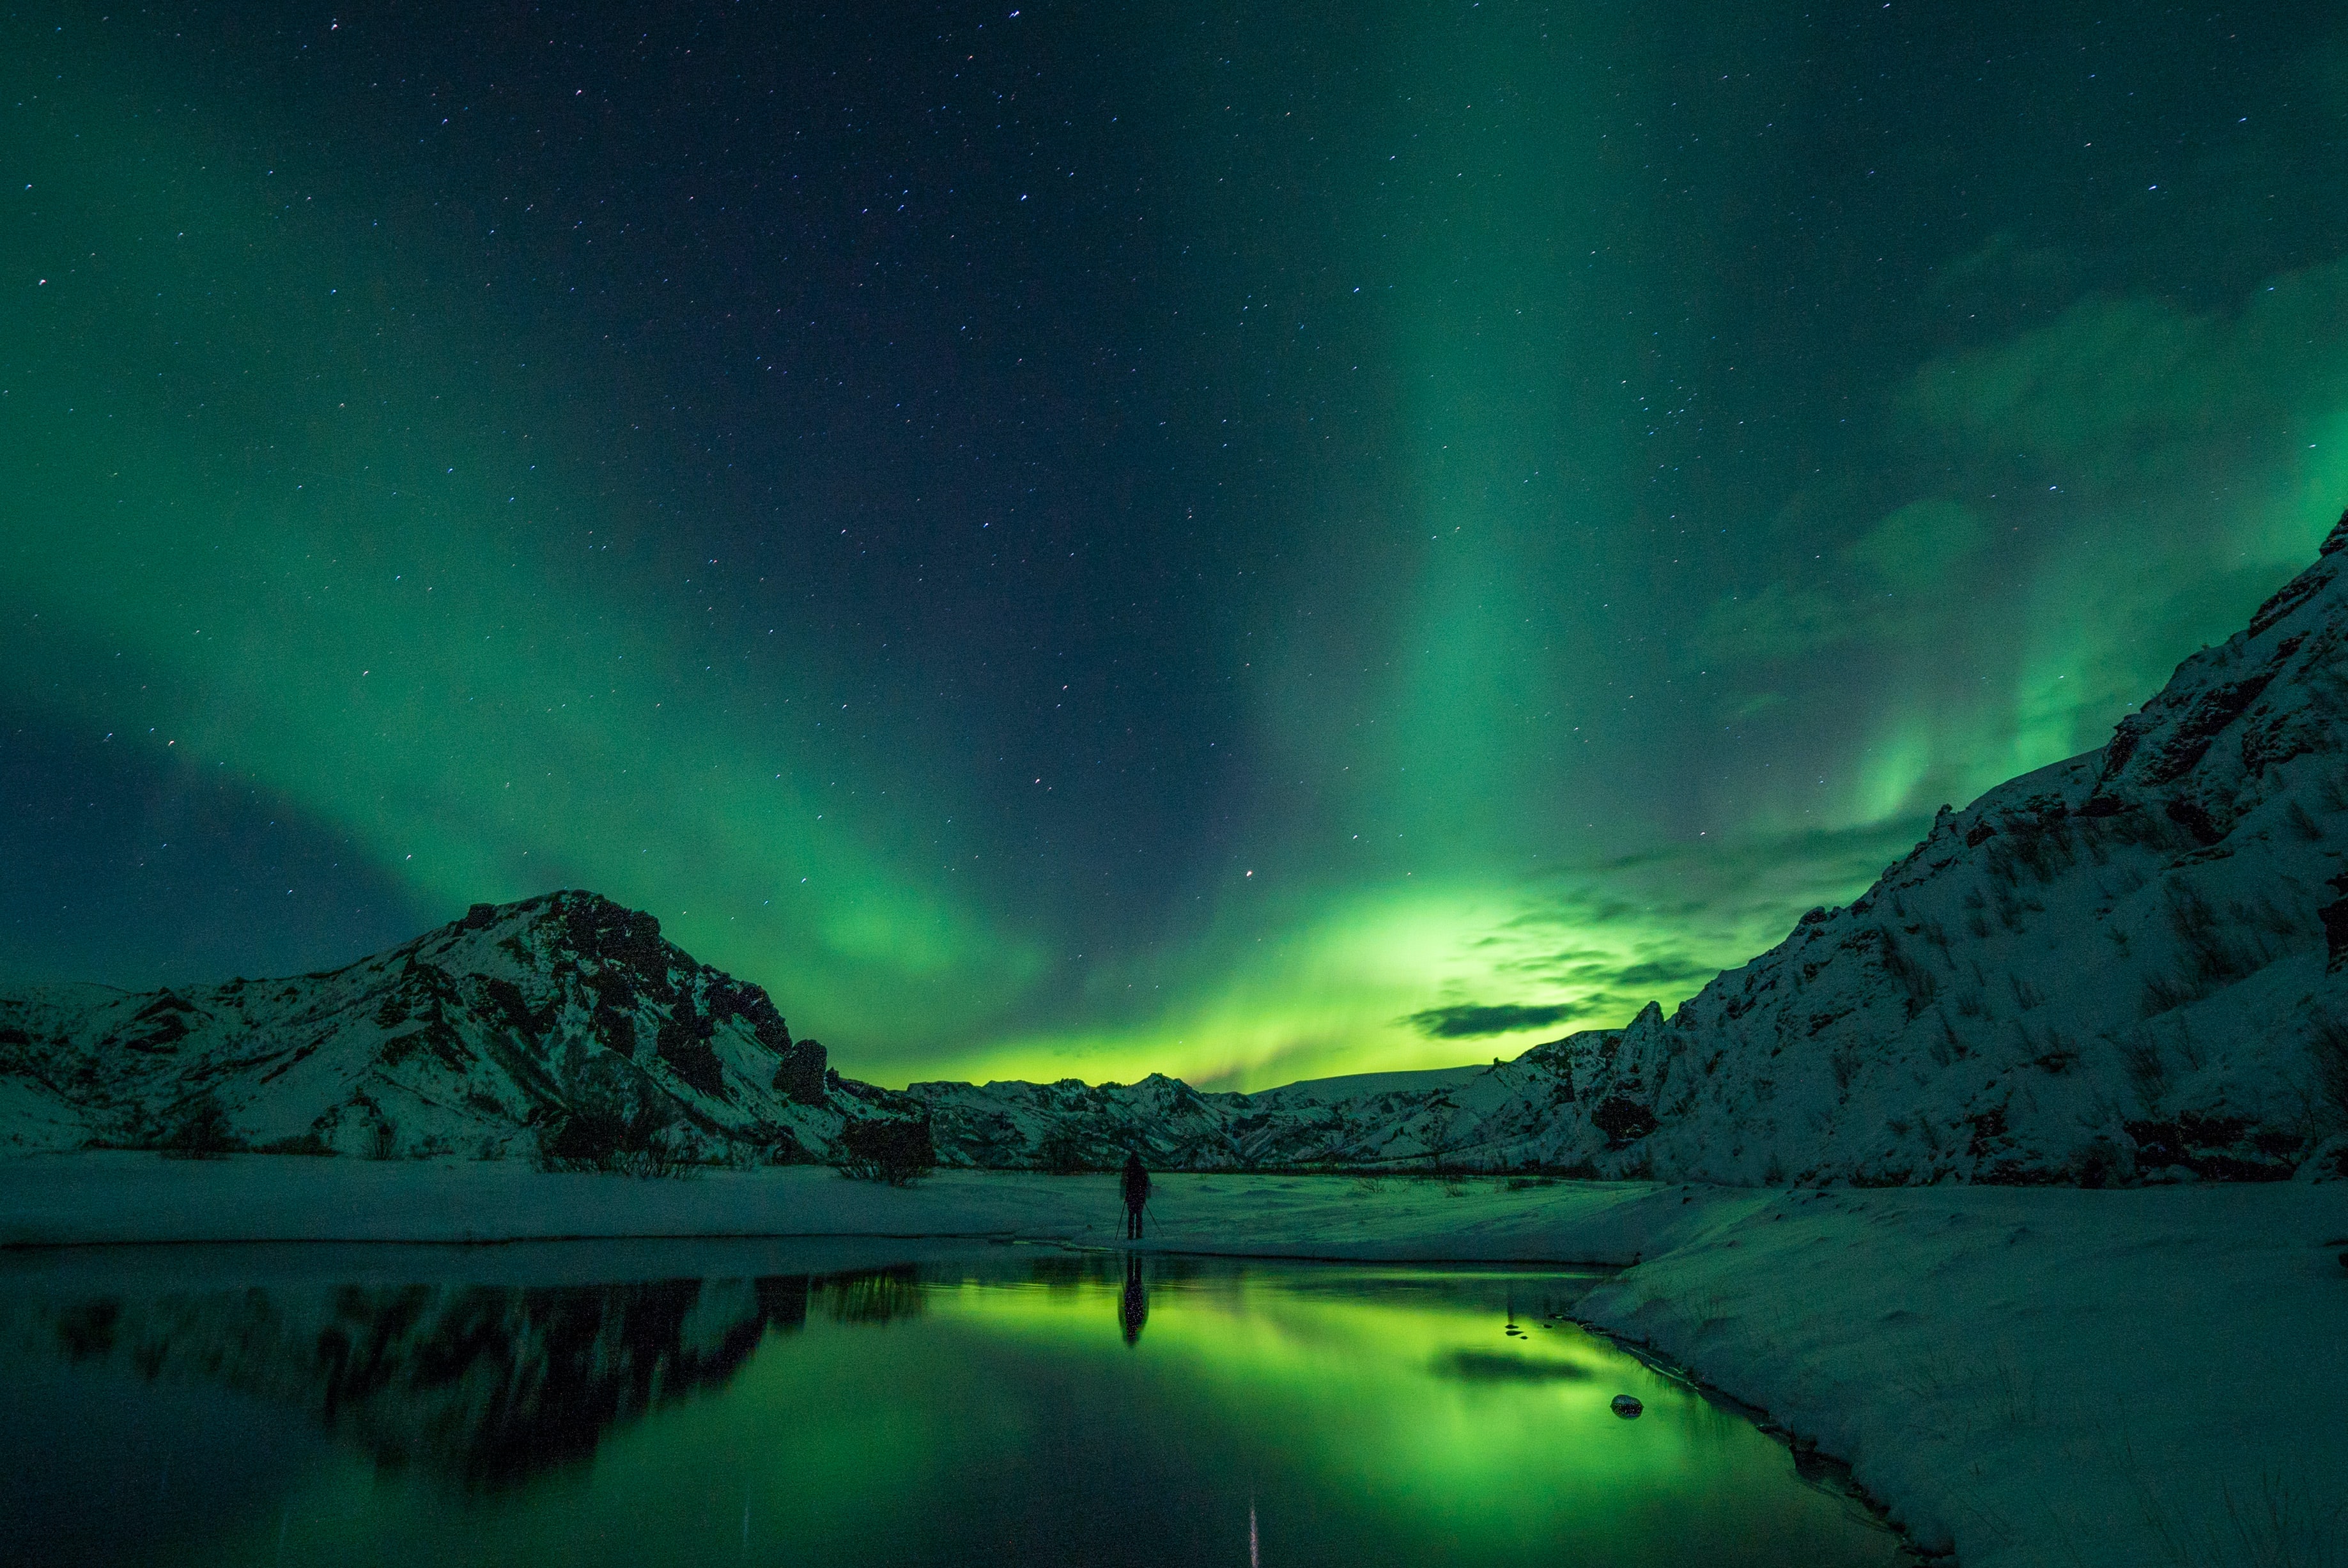 aurora, green lights over winter landscape